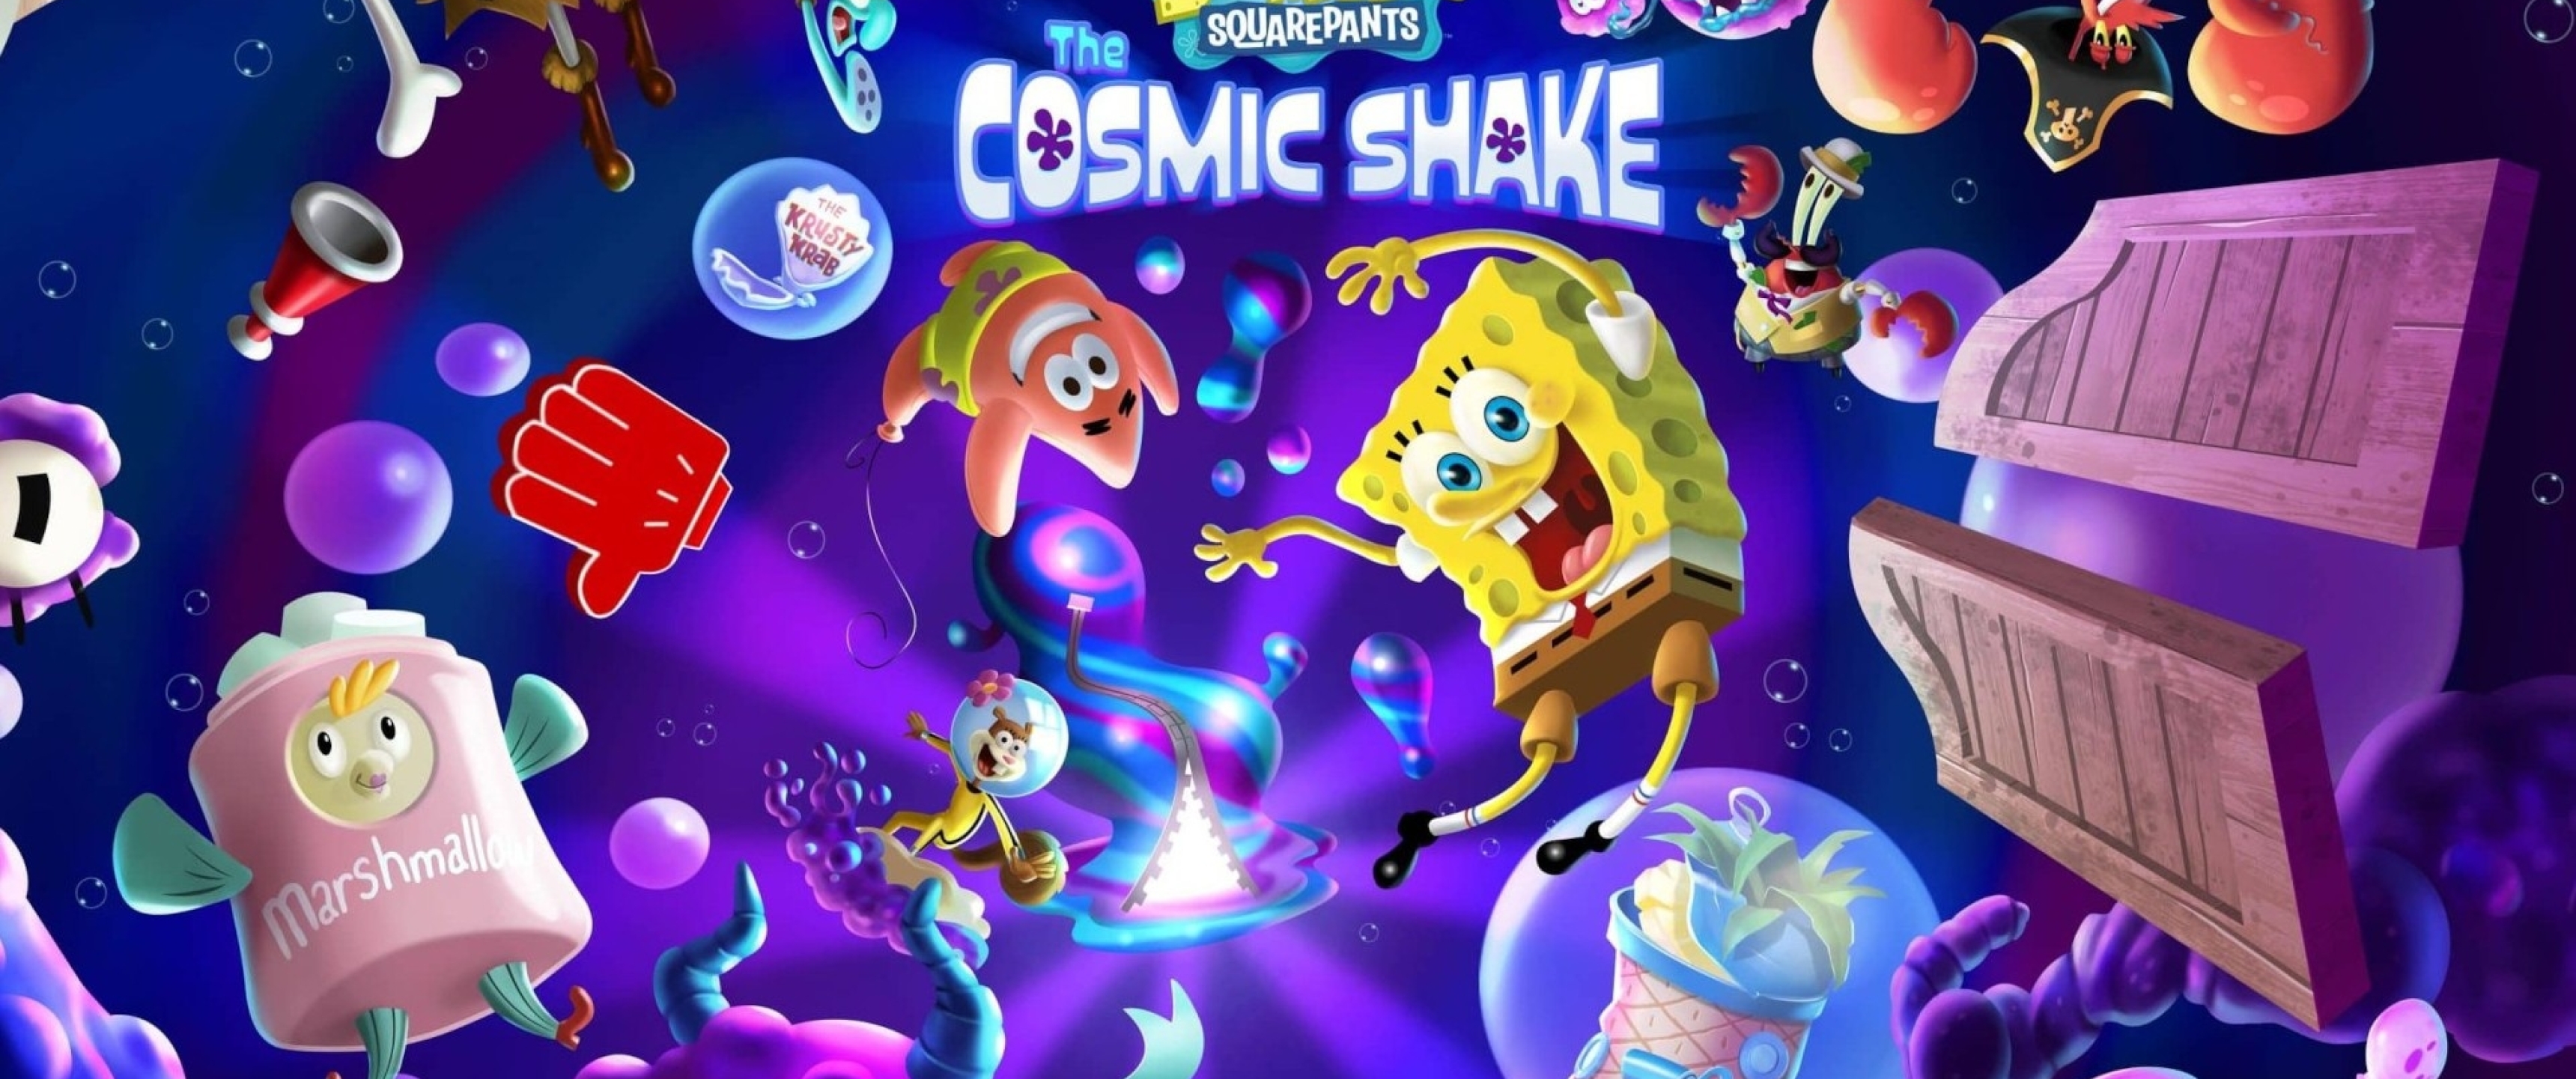 3440x1441 Spongebob Squarepants The Cosmic Shake Hd 3440x1441 Resolution Wallpaper Hd Games 4k 5623